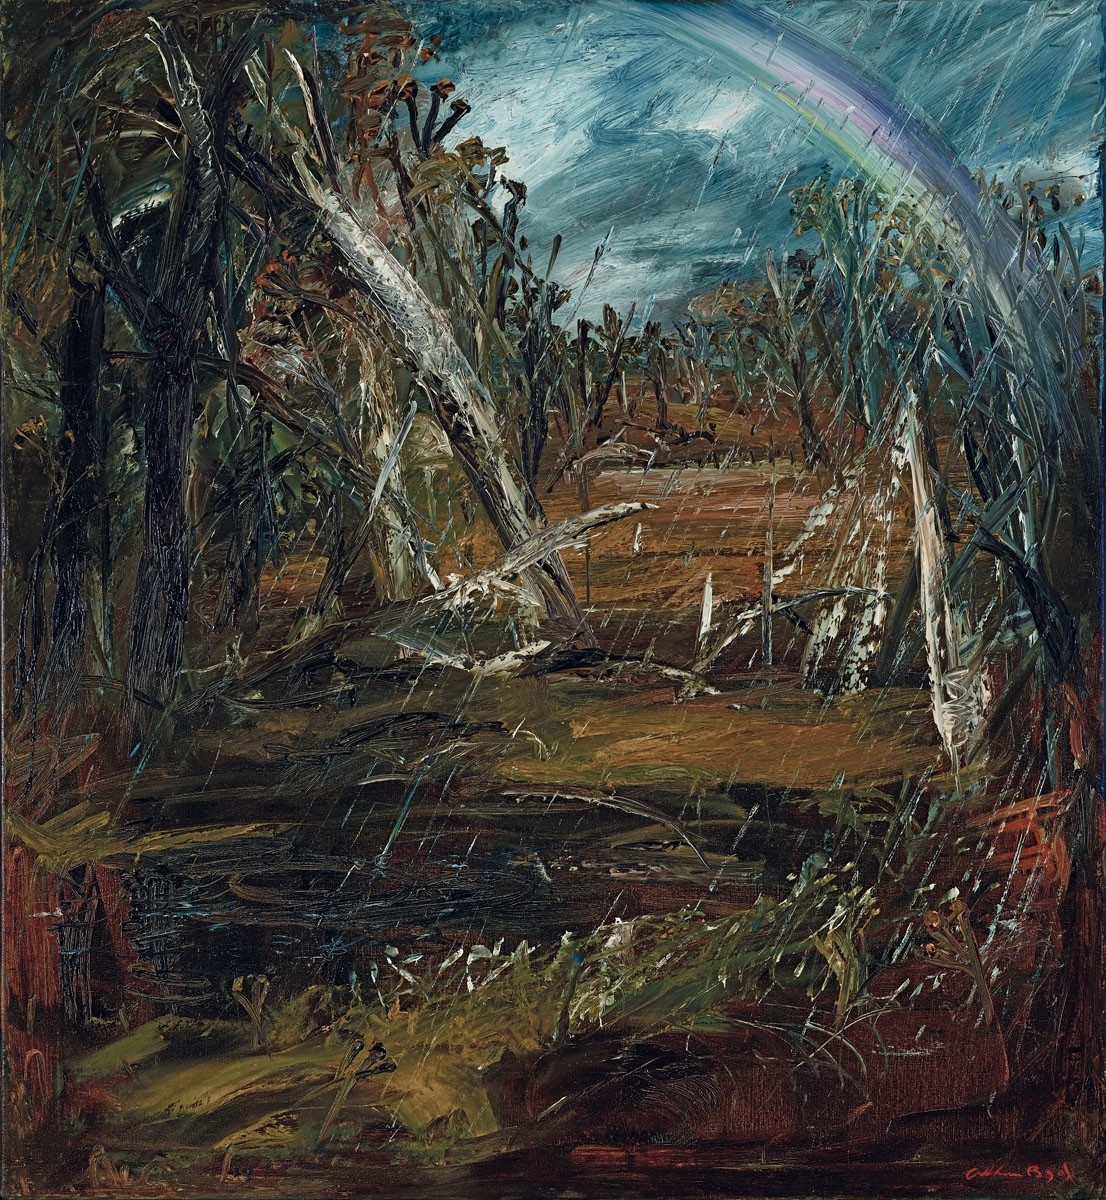 Landscape with Rainbow by Arthur Boyd, 1973